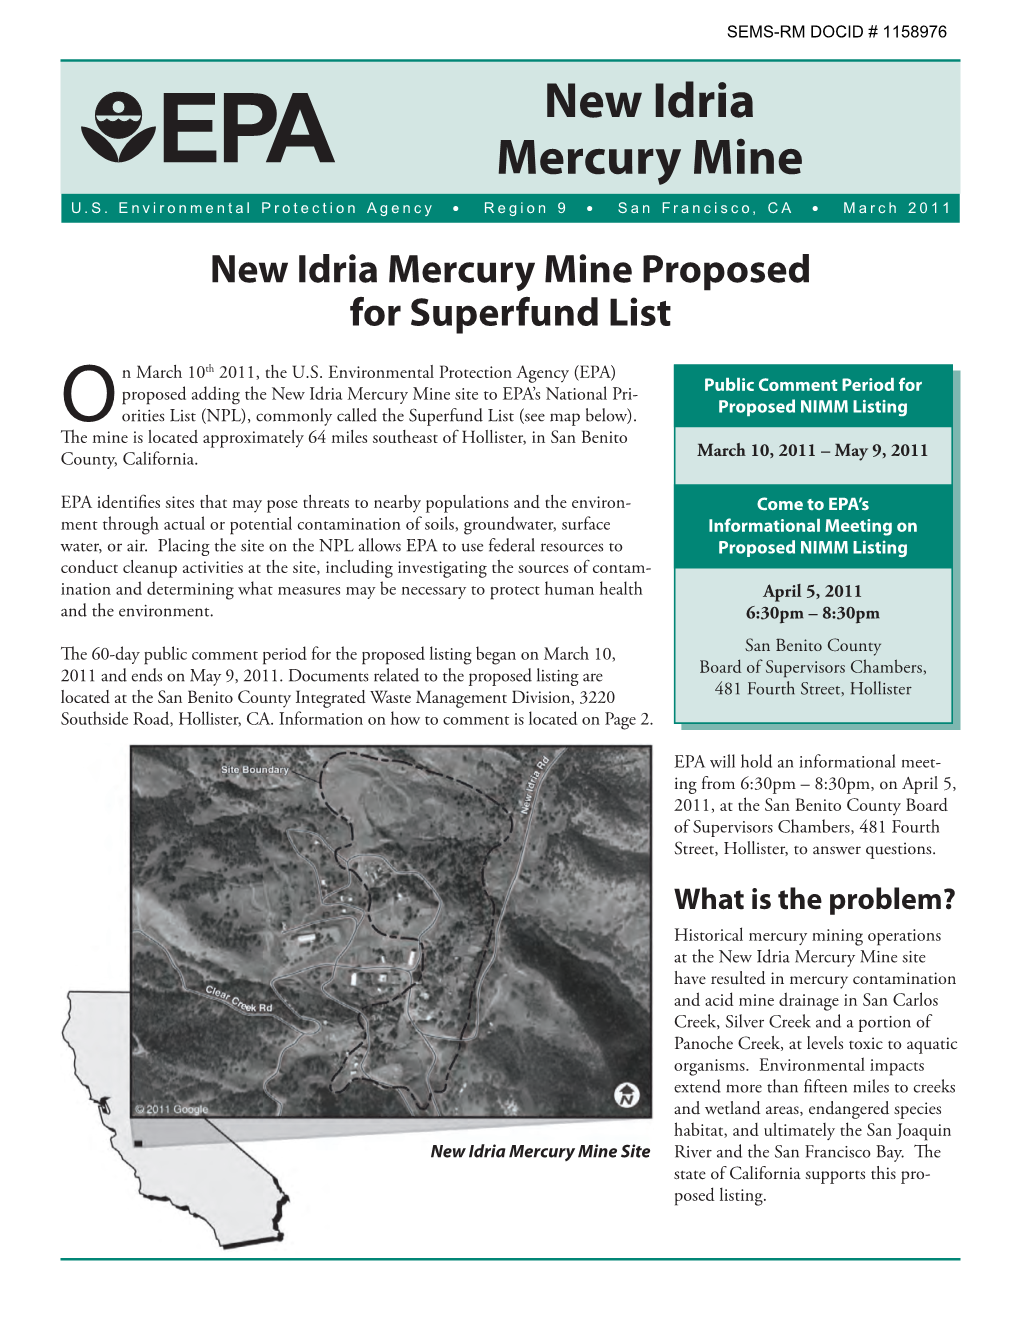 New Idria Mercury Mine Proposed for Superfund List